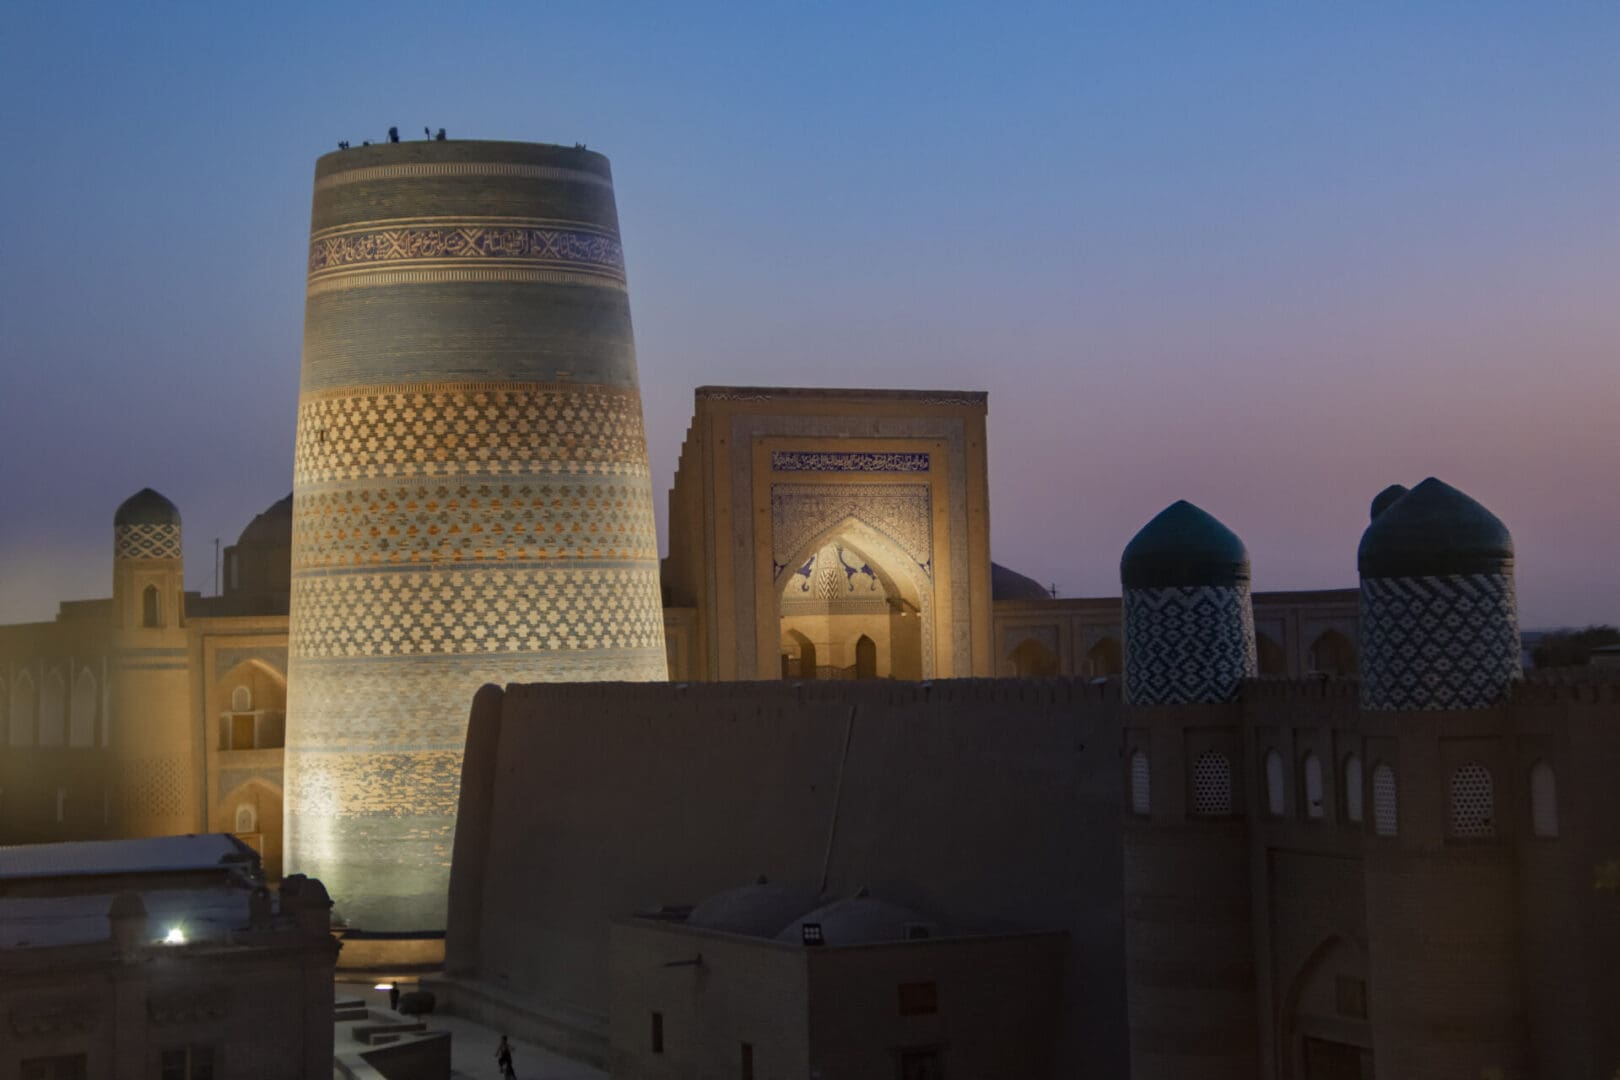 A mosque is lit up at dusk in uzbekistan.